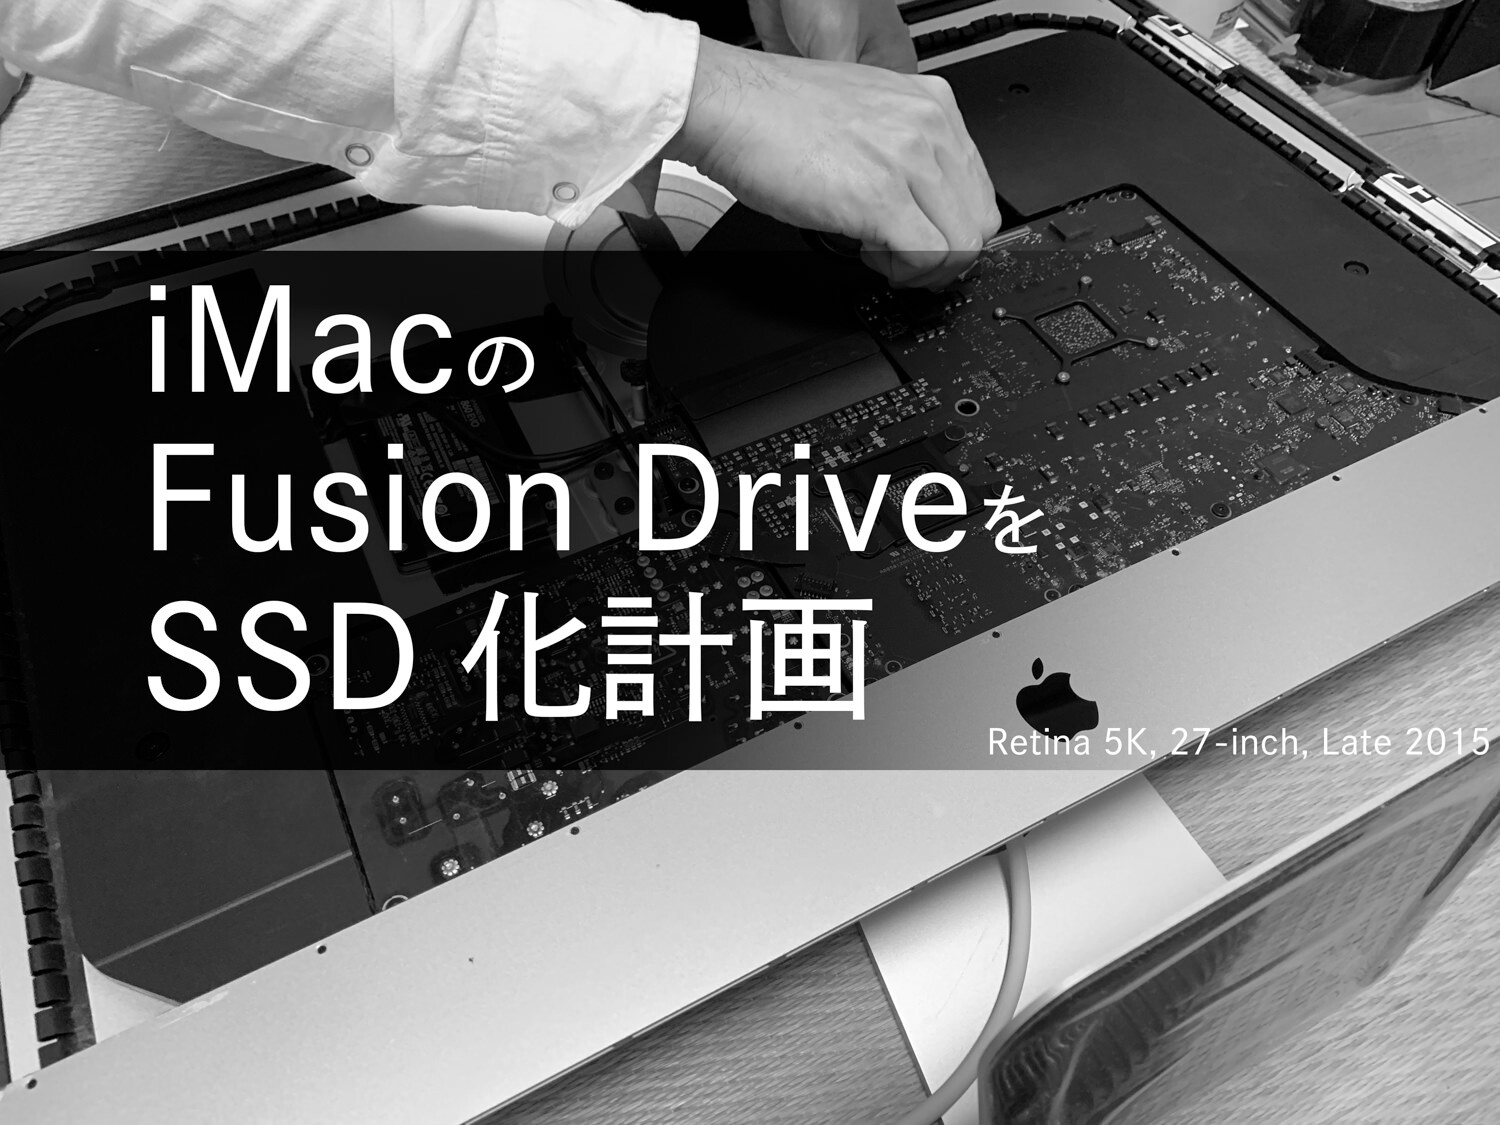 George Eliot Mustache nap iMacのFusion DriveをSSDに置換したメモ